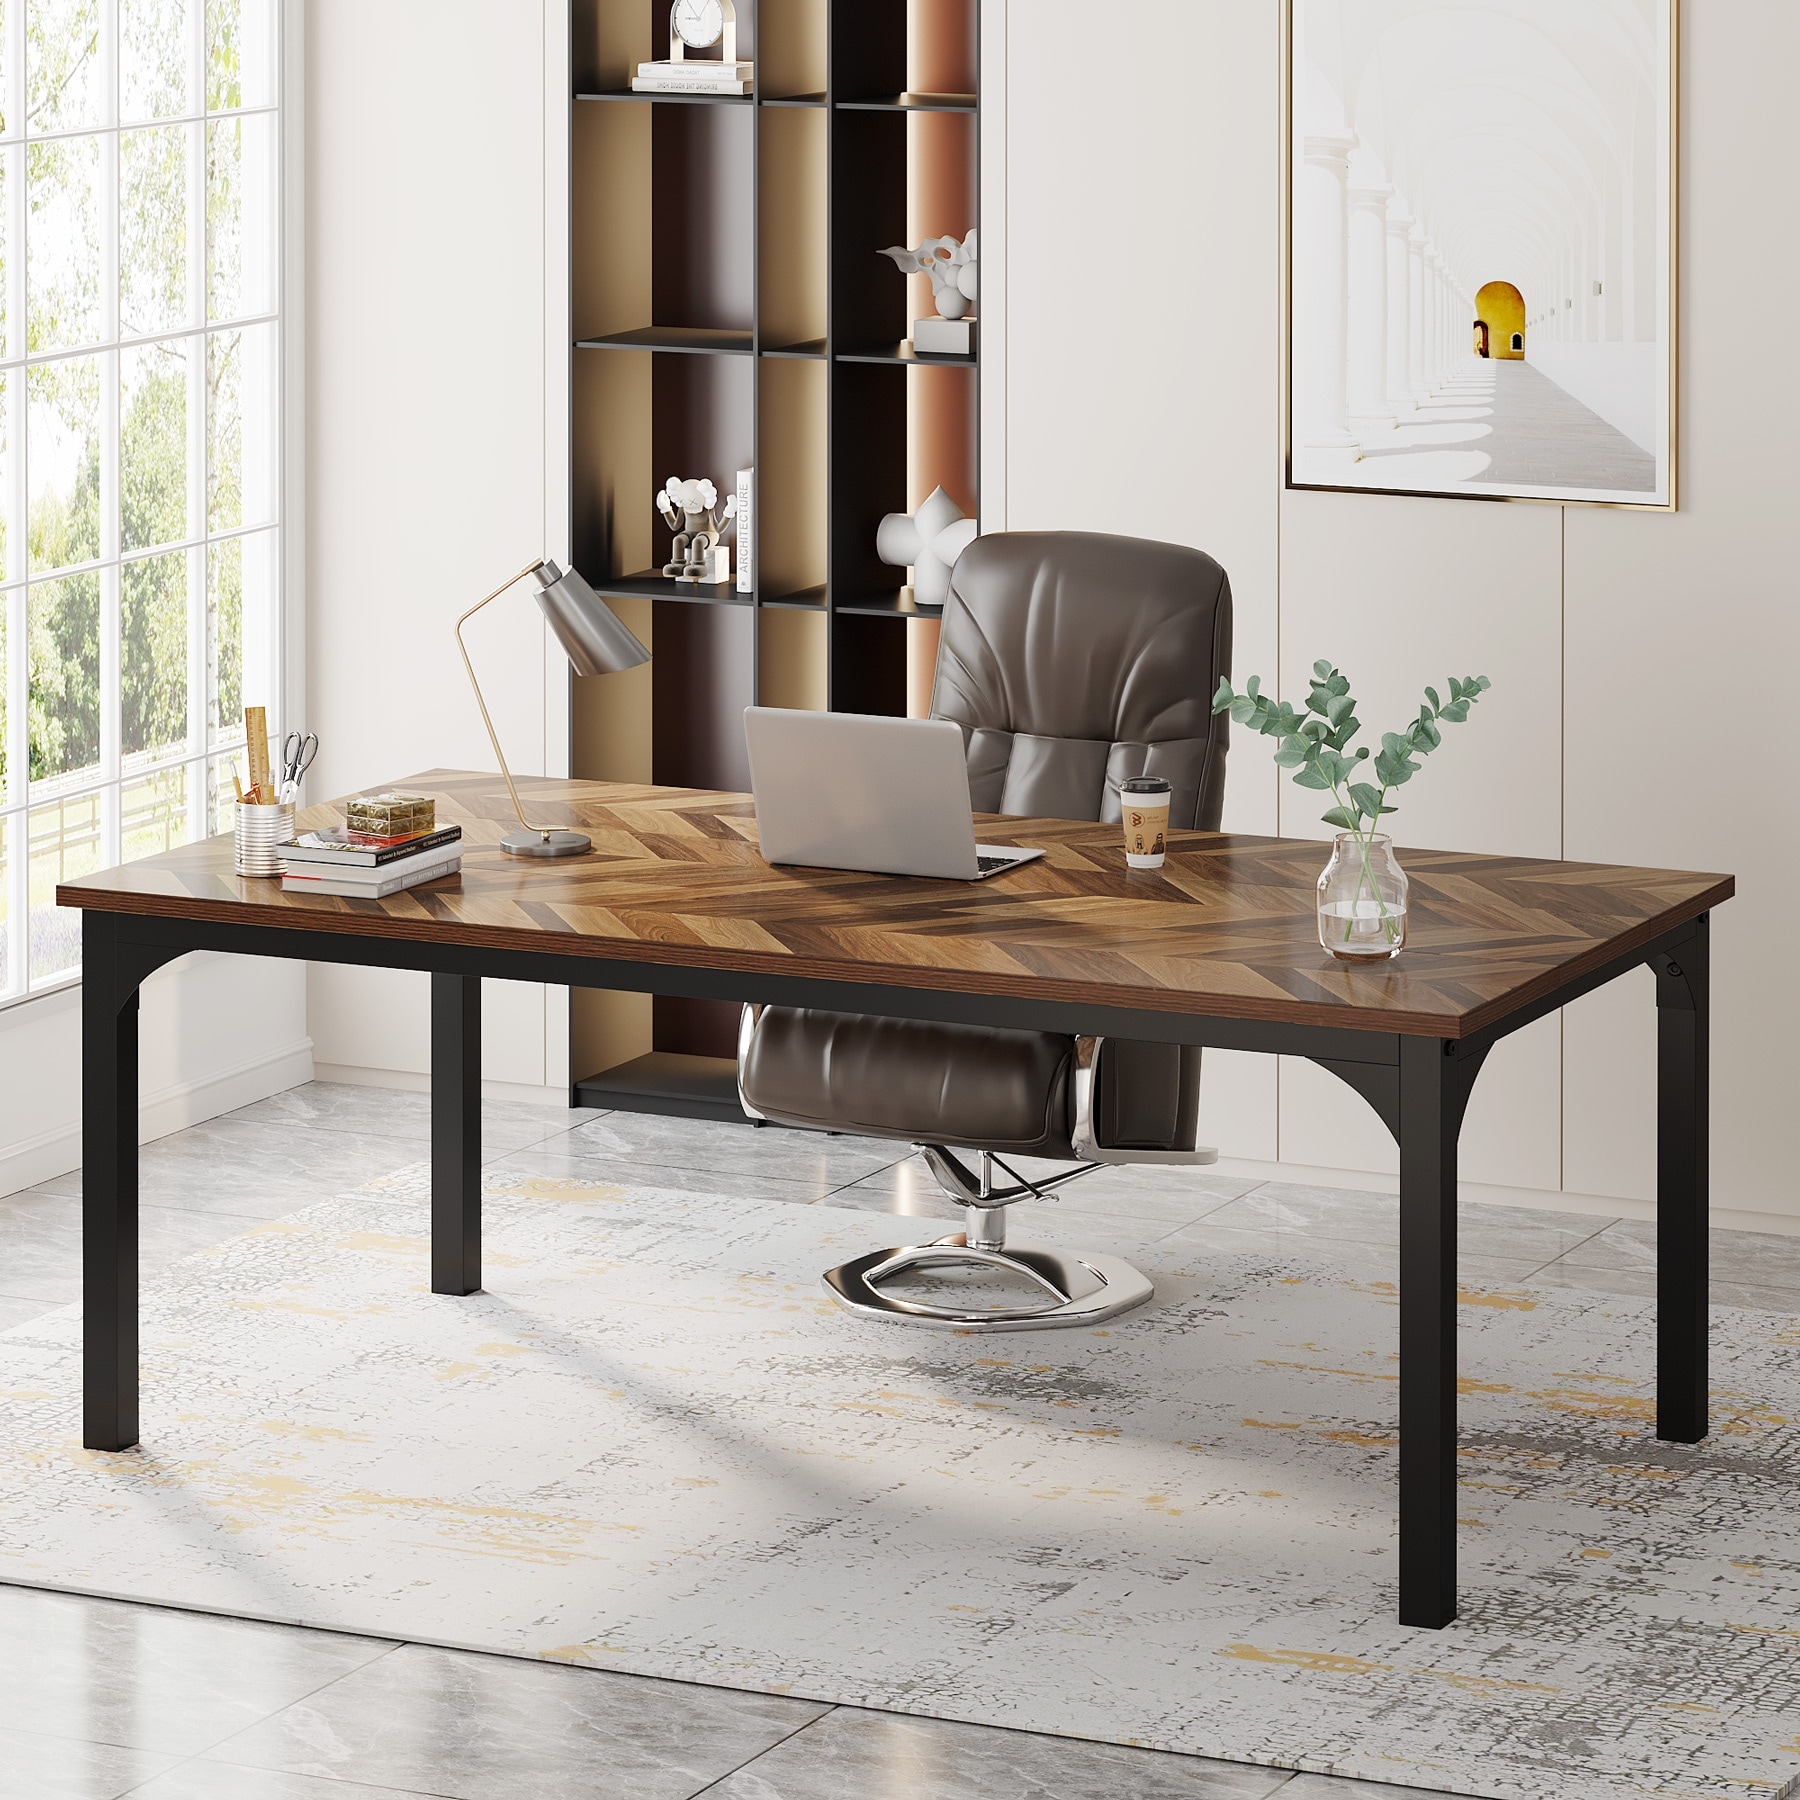 Office Desk : Buy Wooden Desk for Home Office Online at Best Price